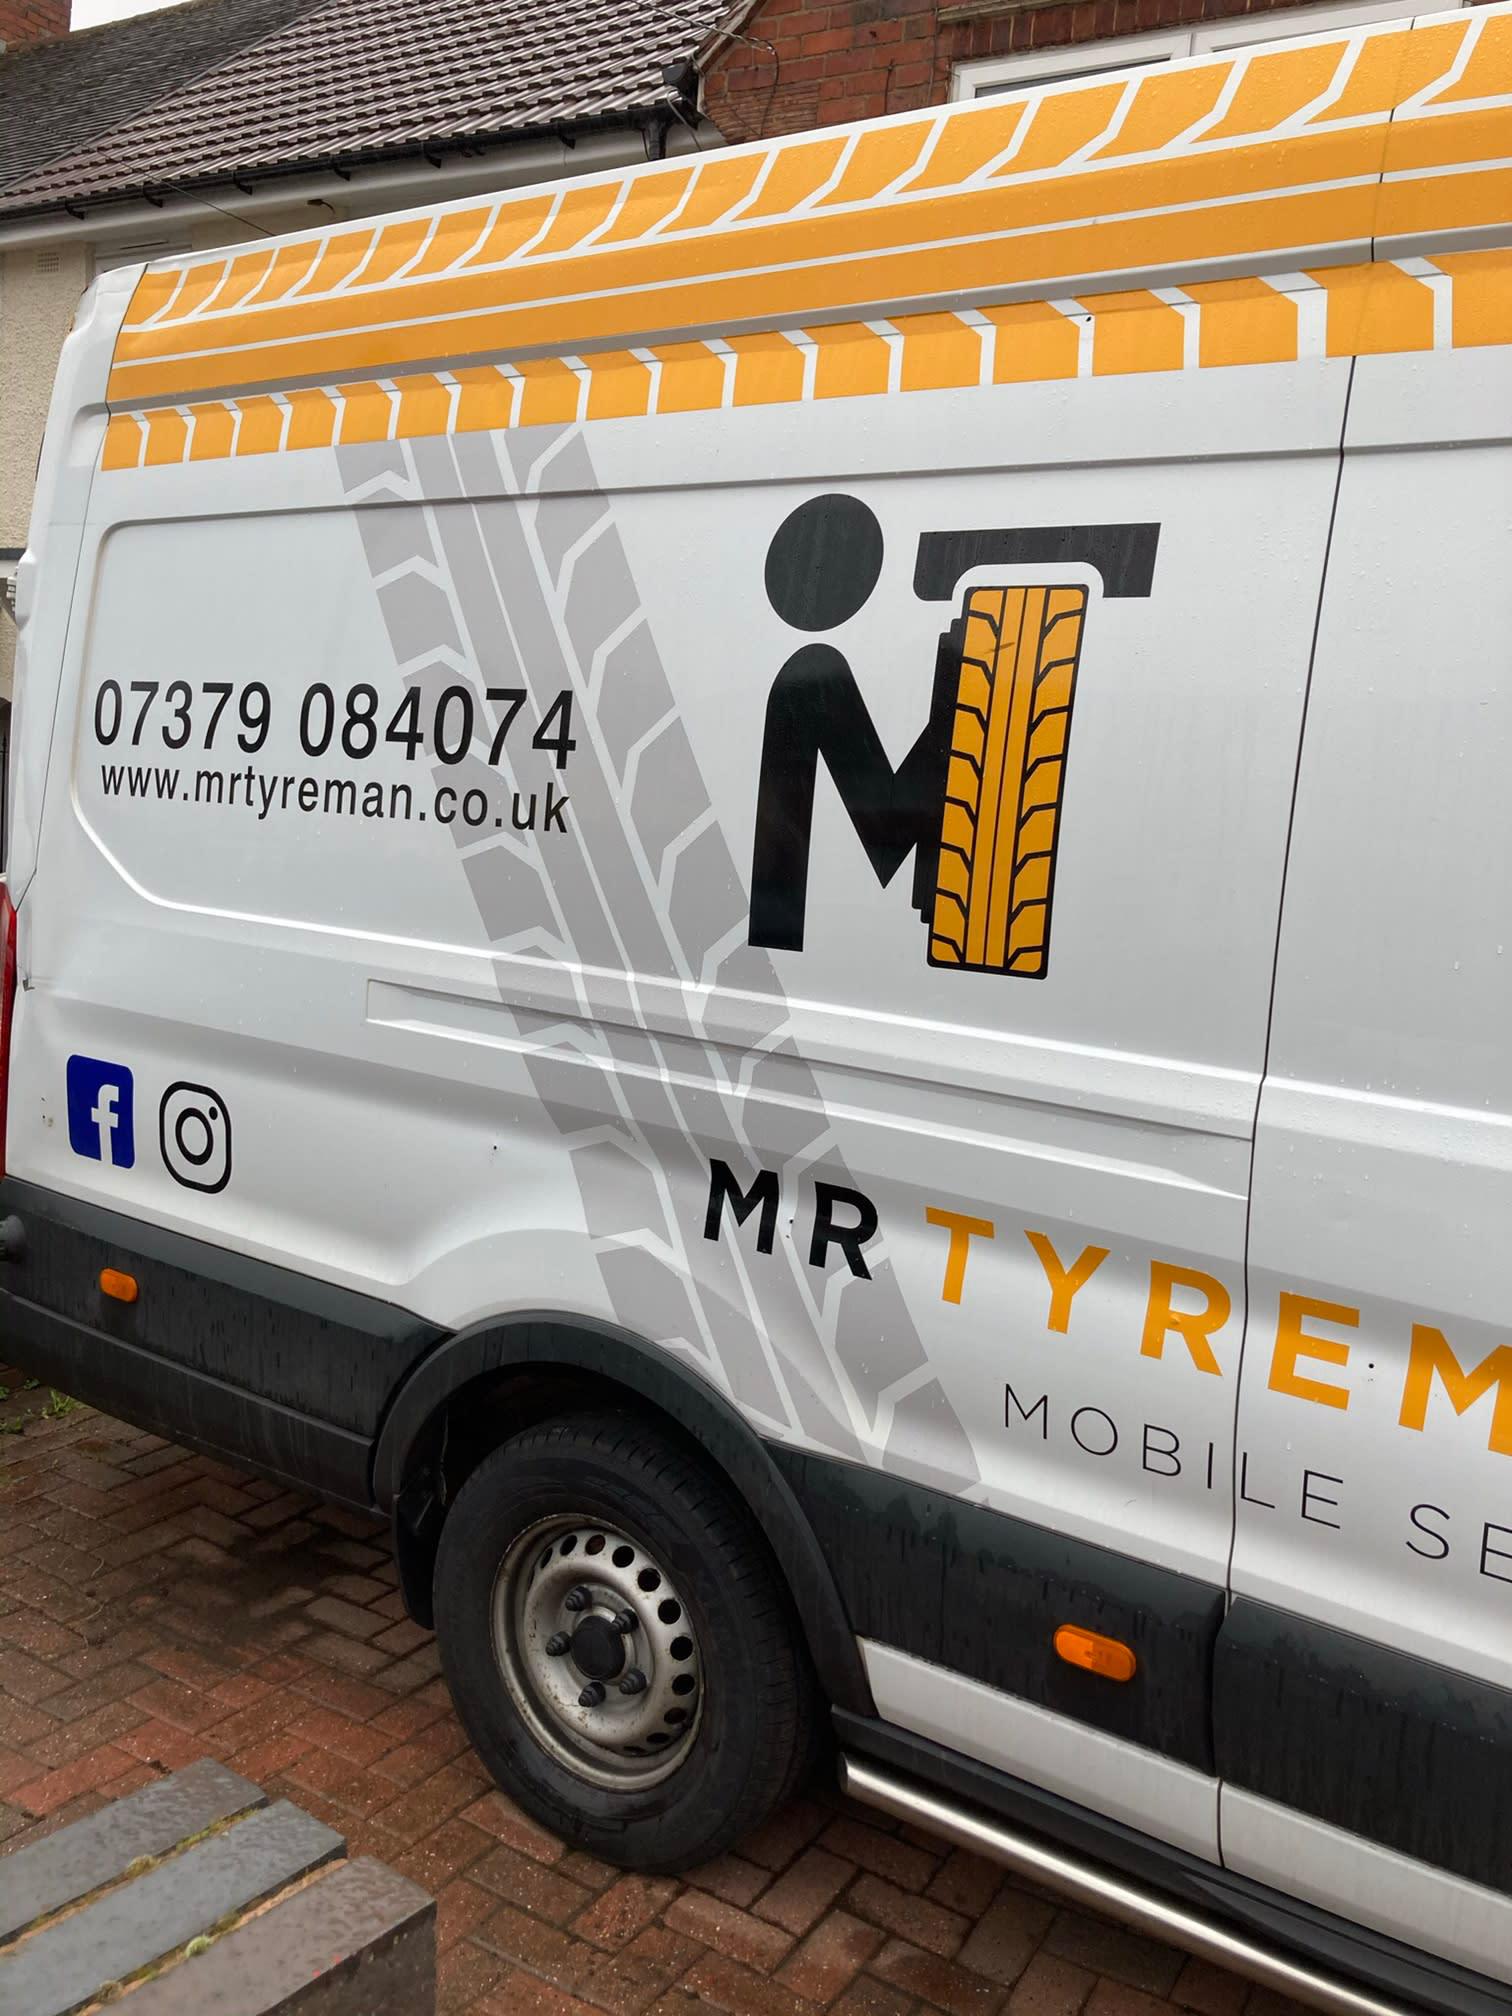 Images Mr Tyreman UK Ltd